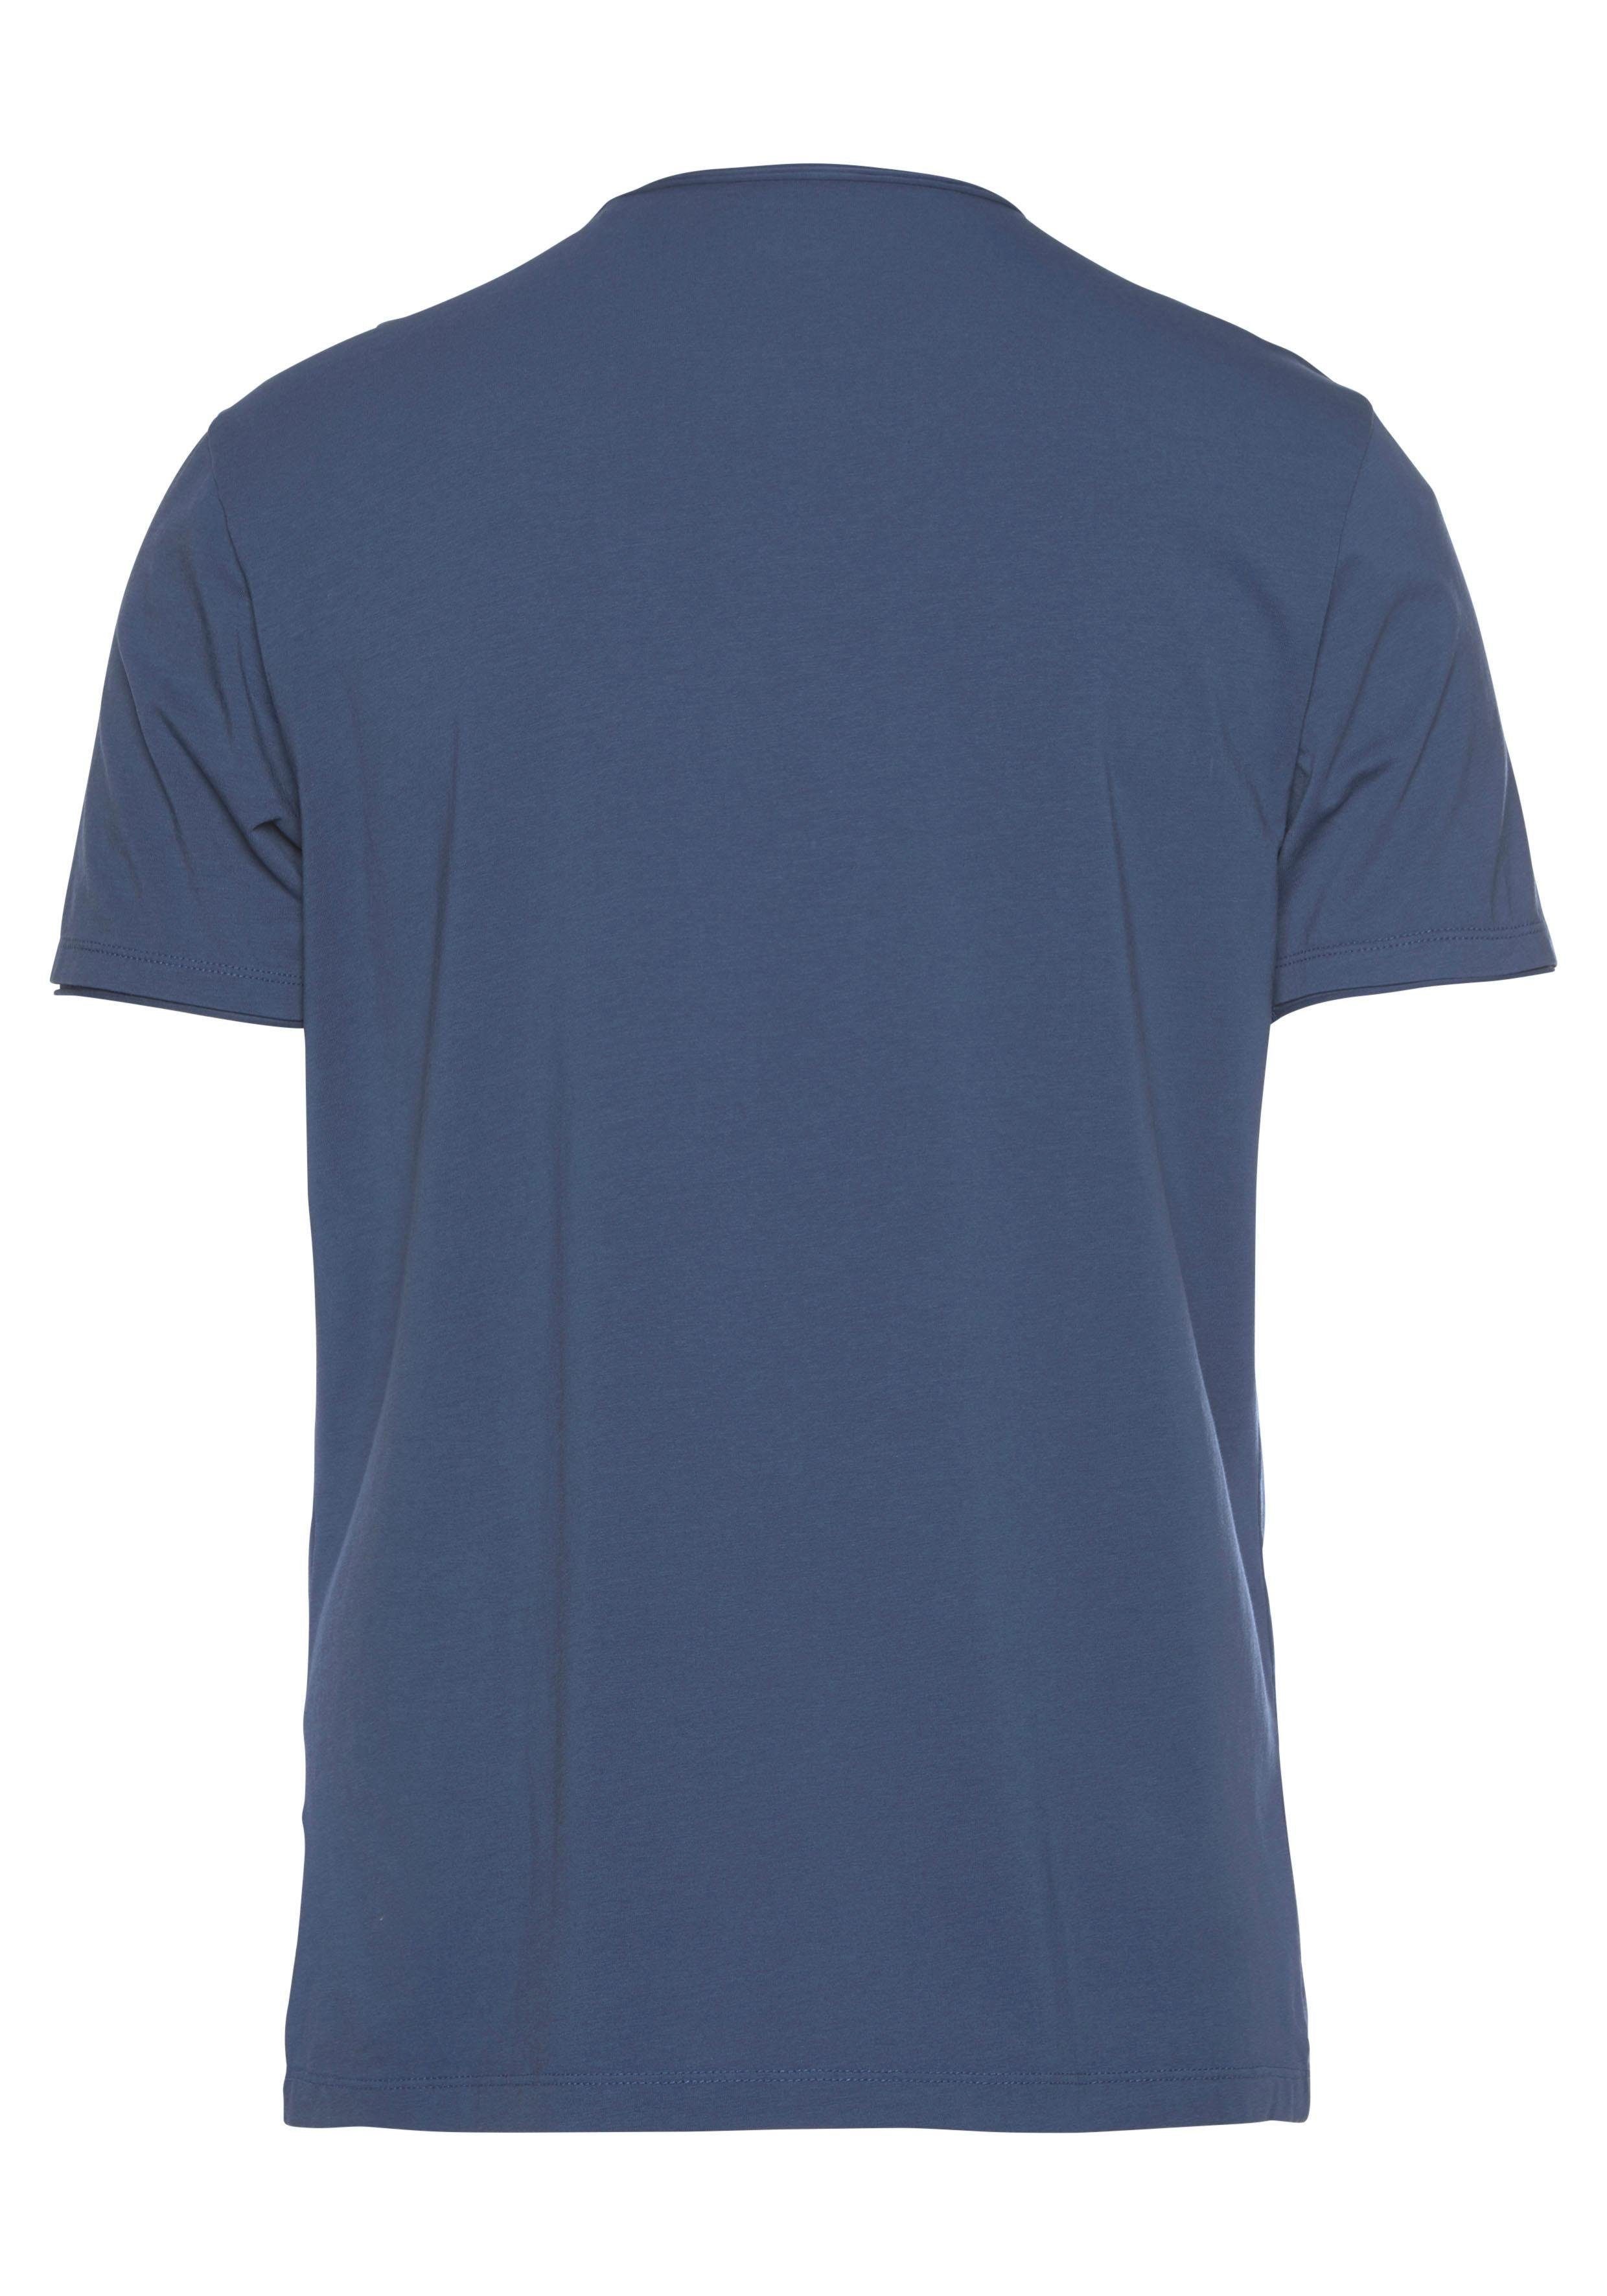 OLYMP T-Shirt Level Five body feinem fit aus Jersey indigo